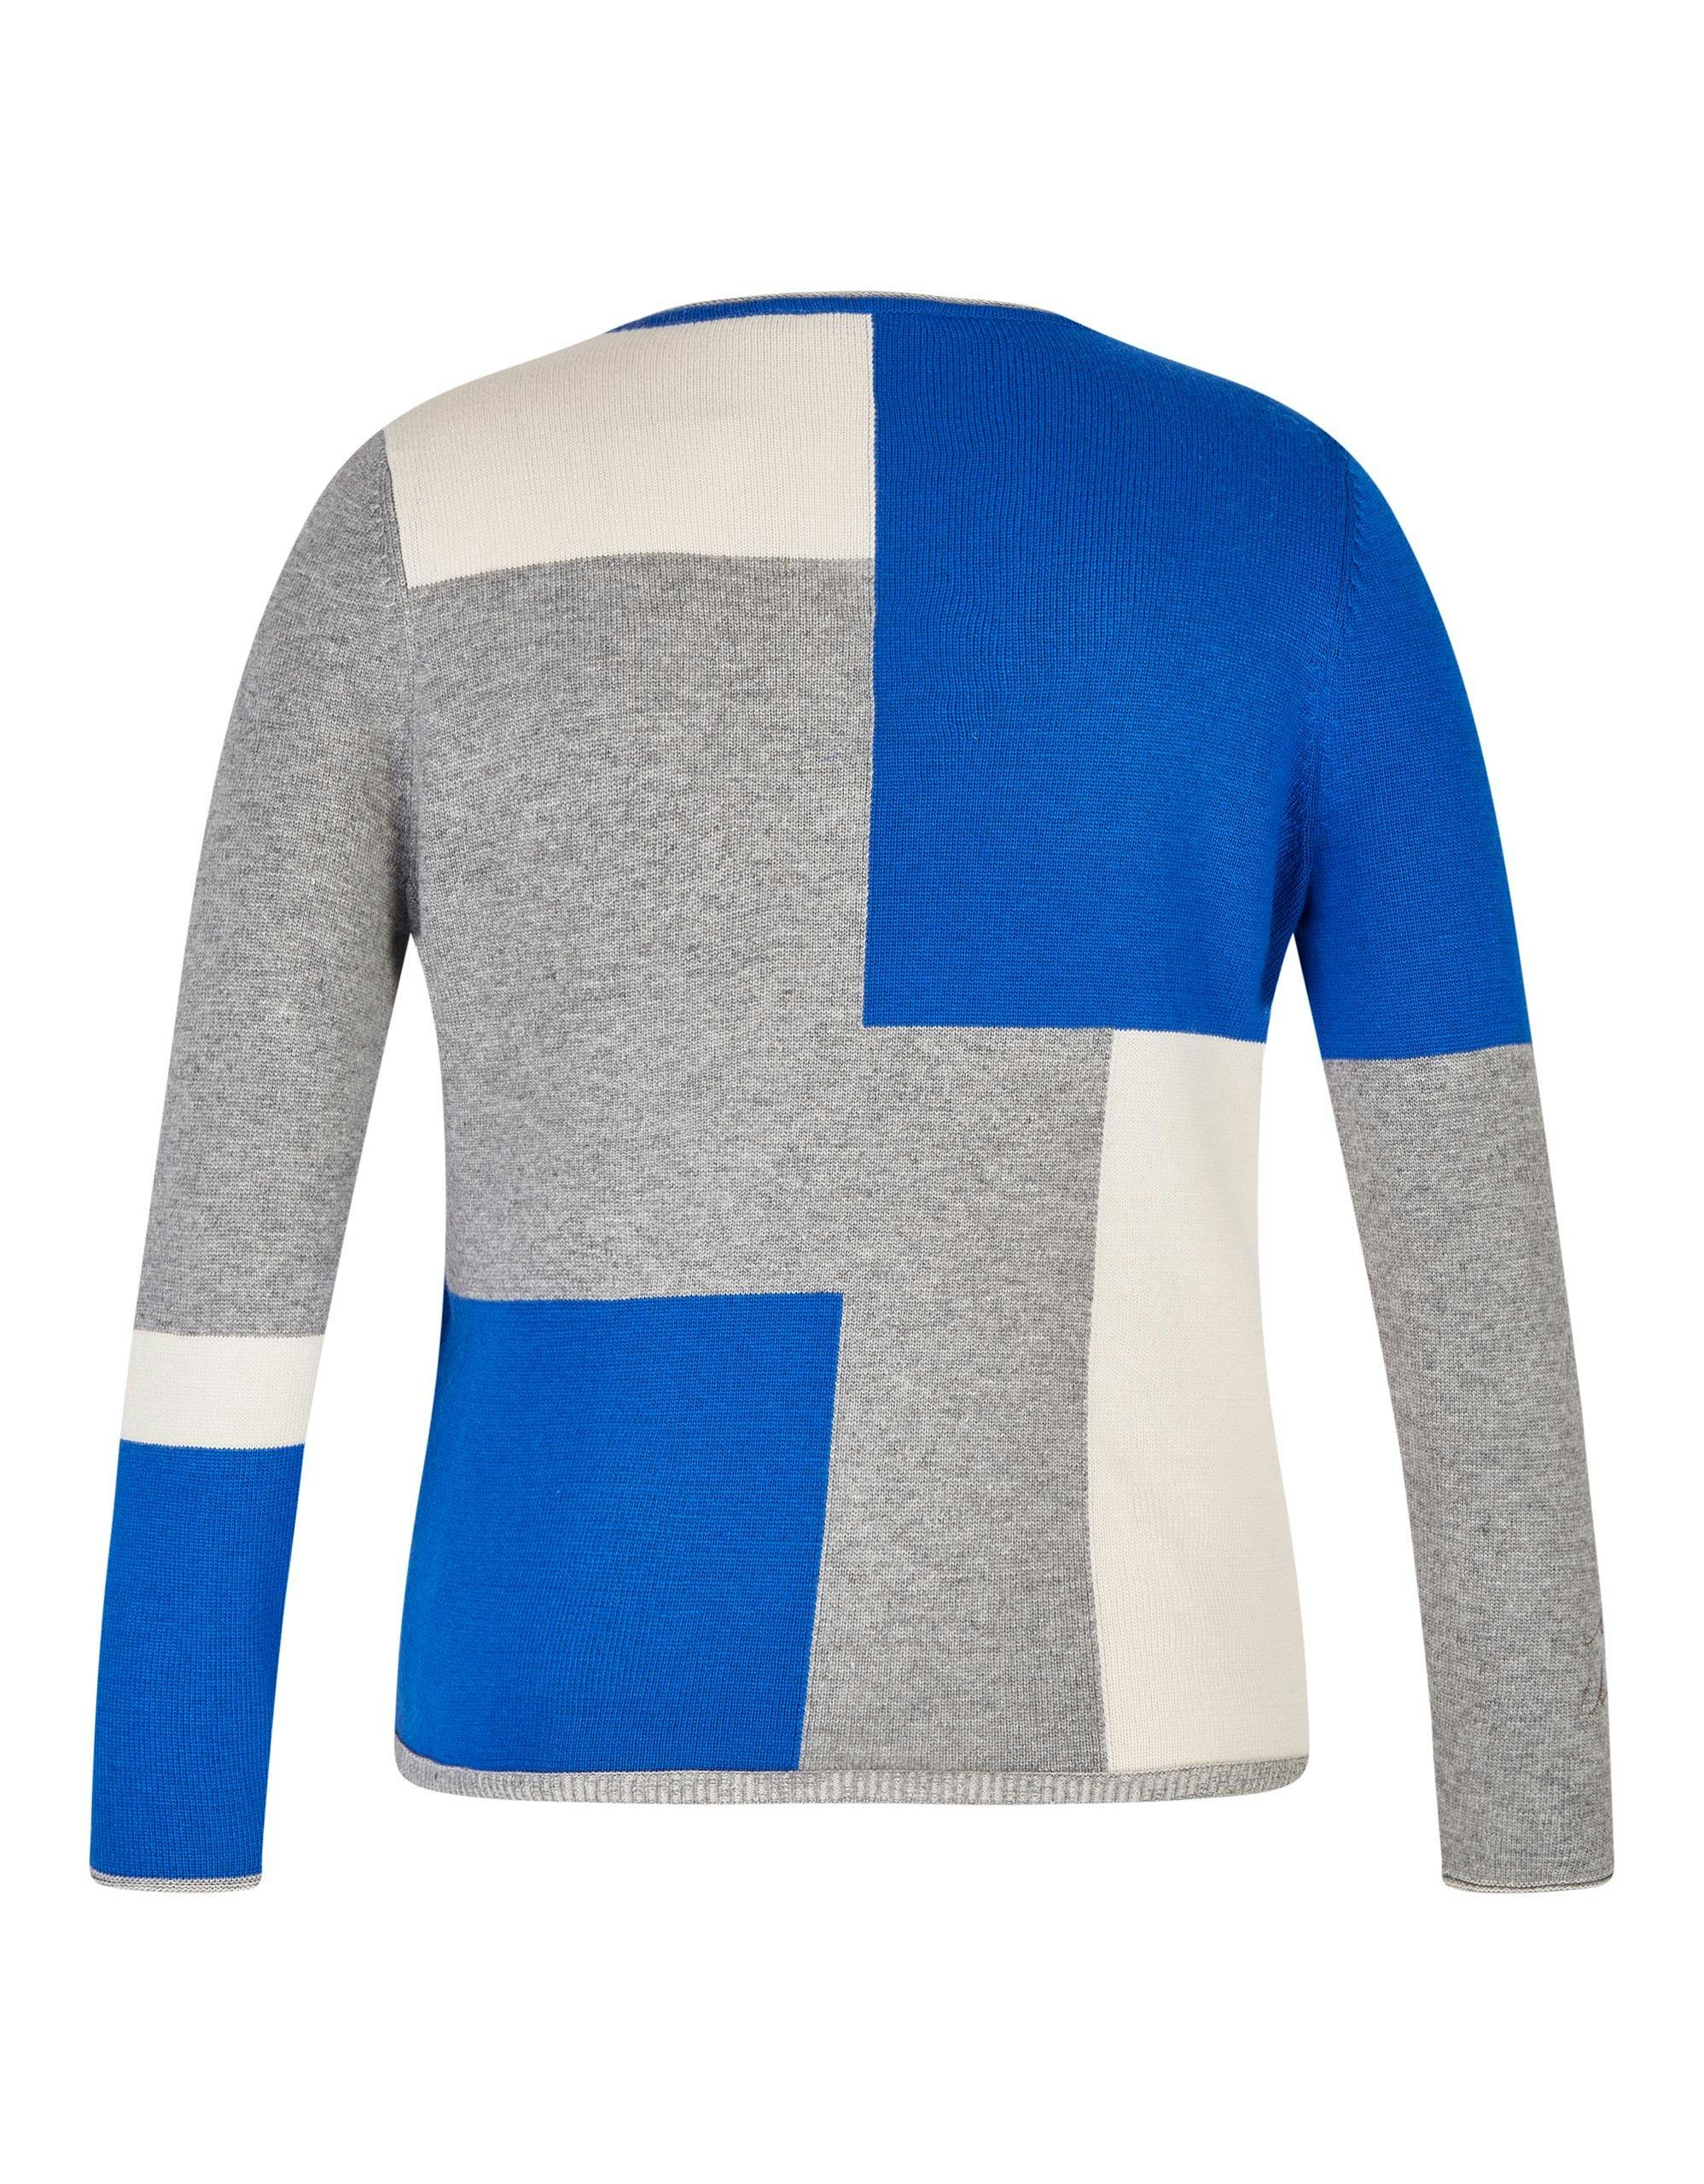 DAMEN Pullovers & Sweatshirts Casual Miintoday Strickjacke Rabatt 68 % Dunkelblau/Weiß L 